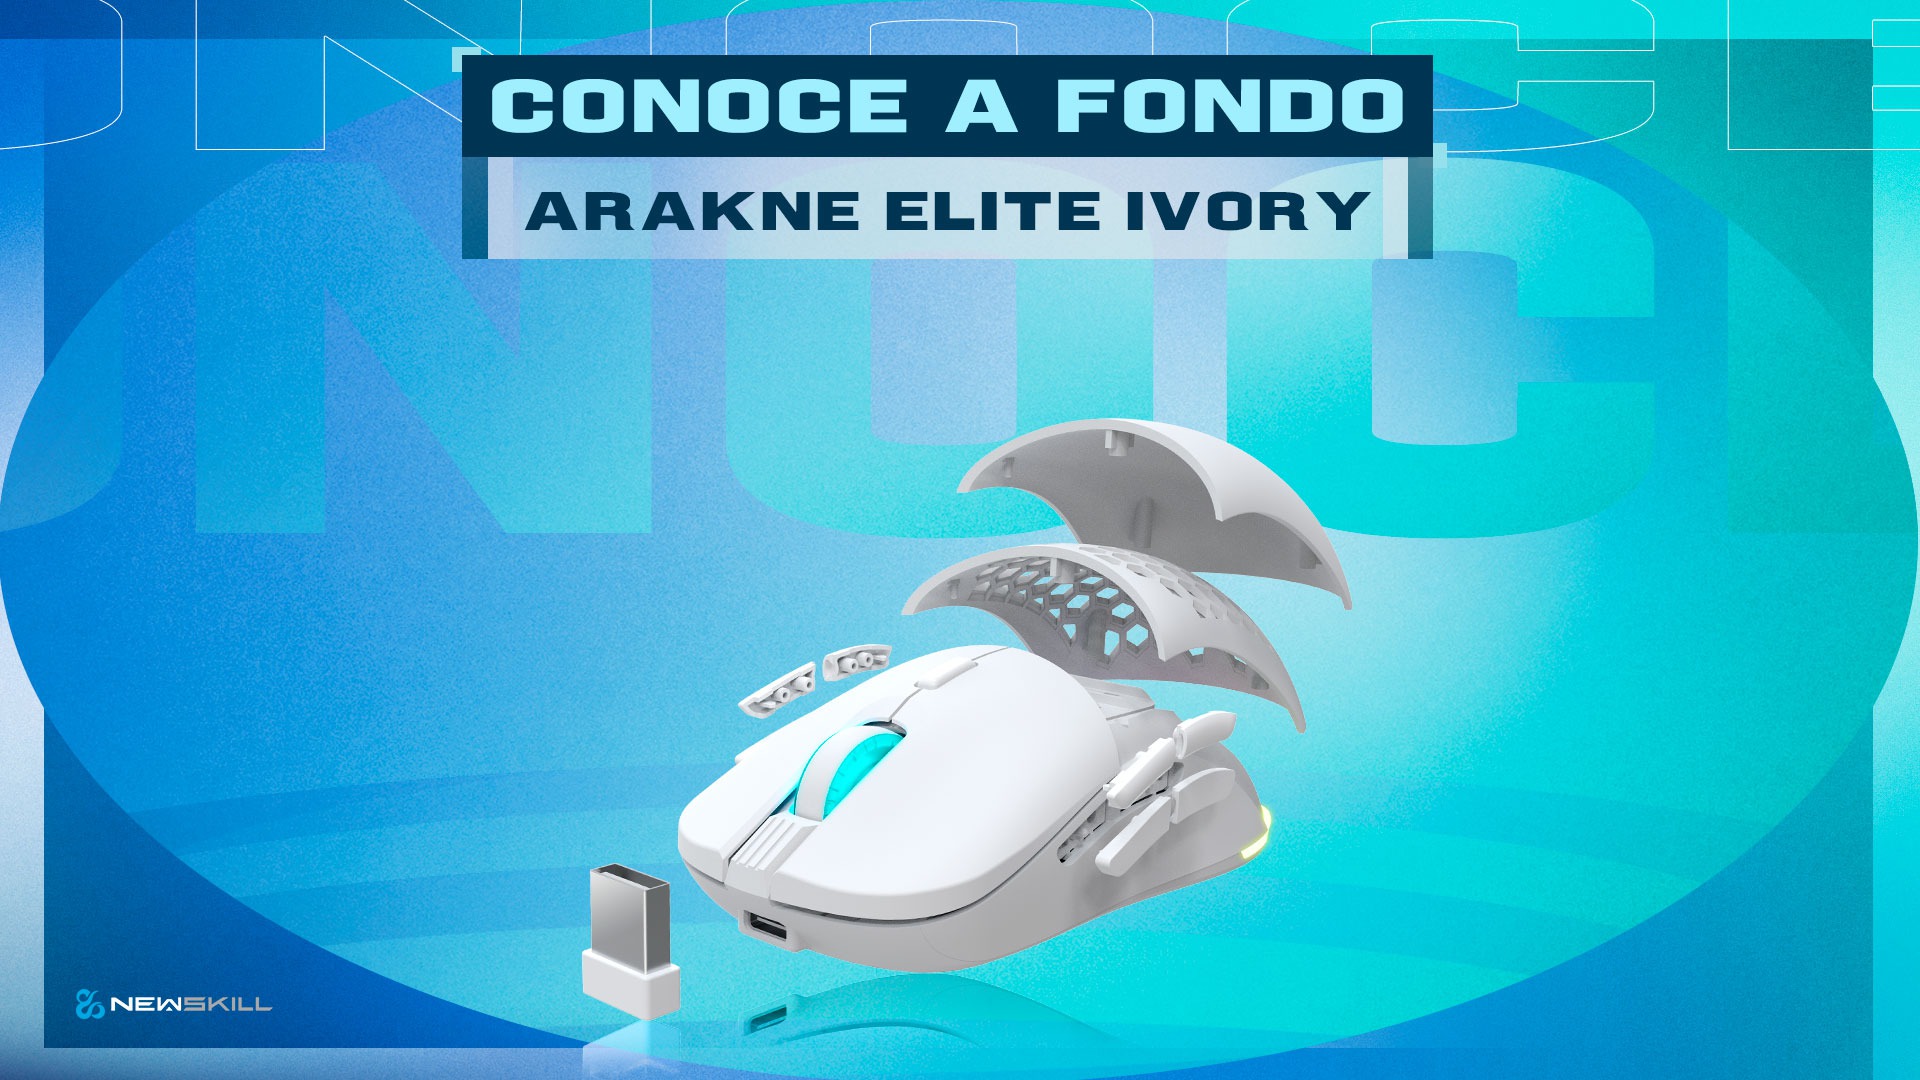 Get to know Arakne Elite Ivory in depth